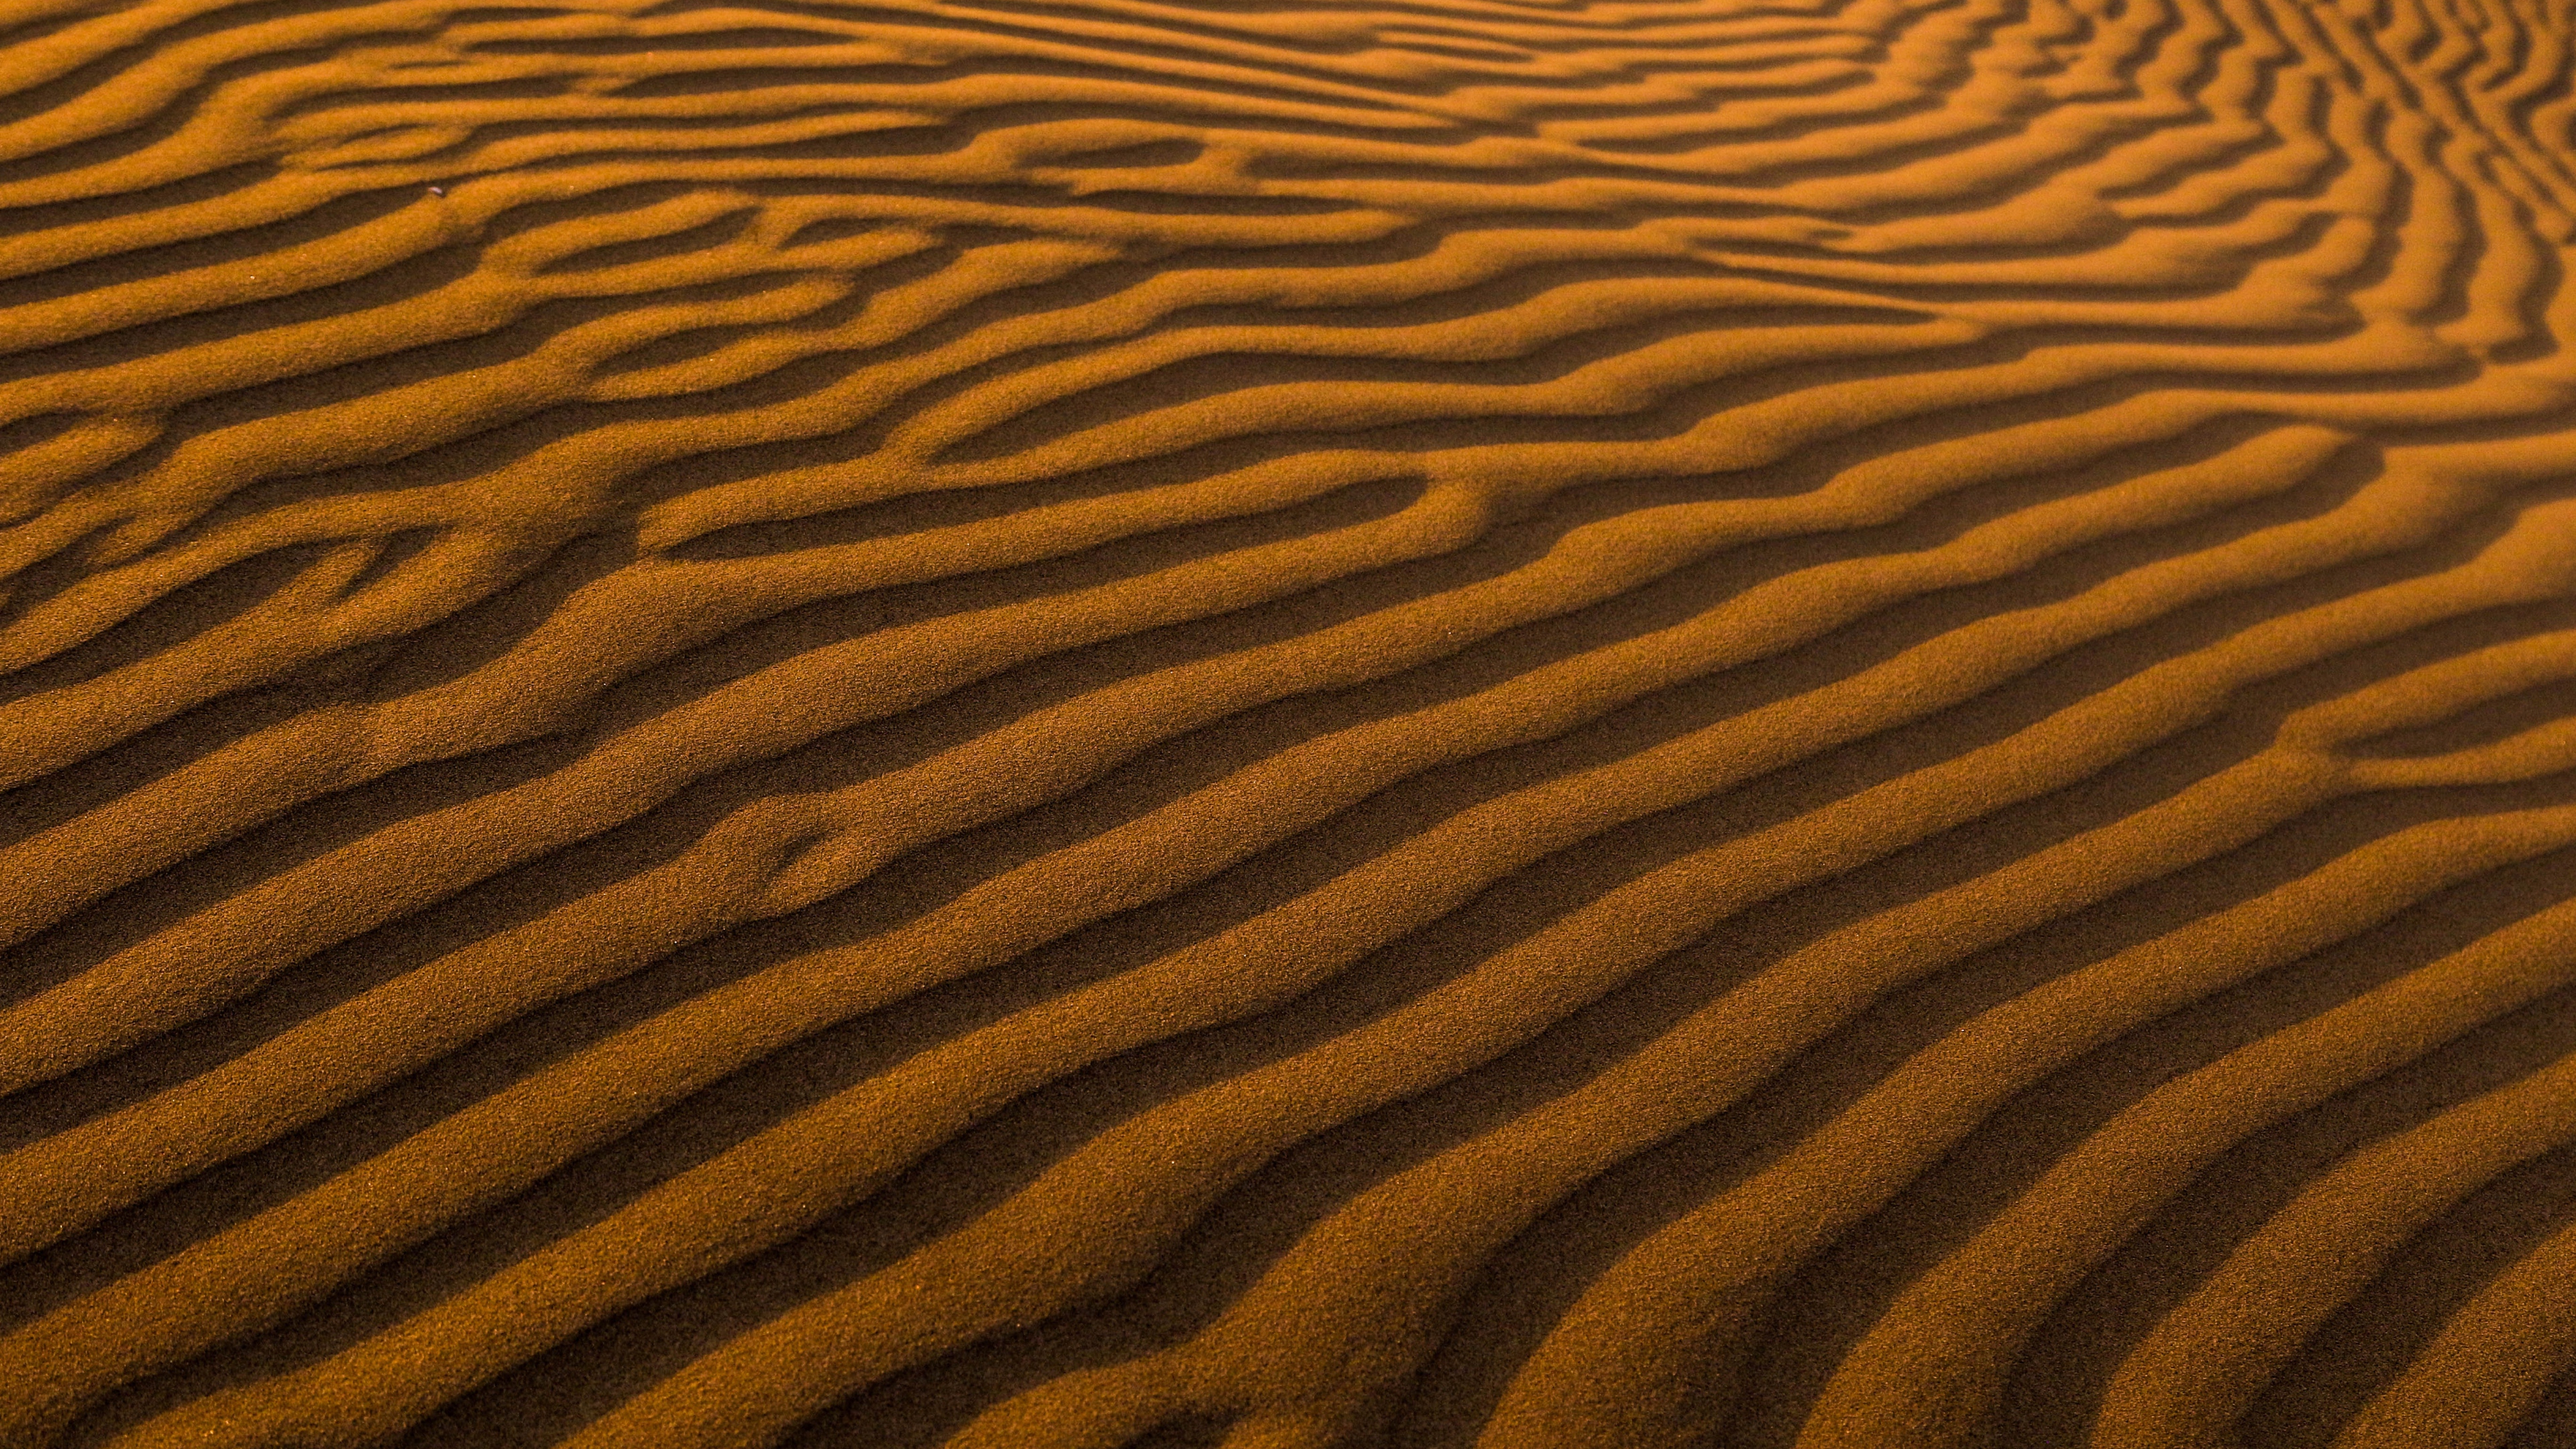 General 3840x2160 nature structure sand desert dunes minimalism photography texture